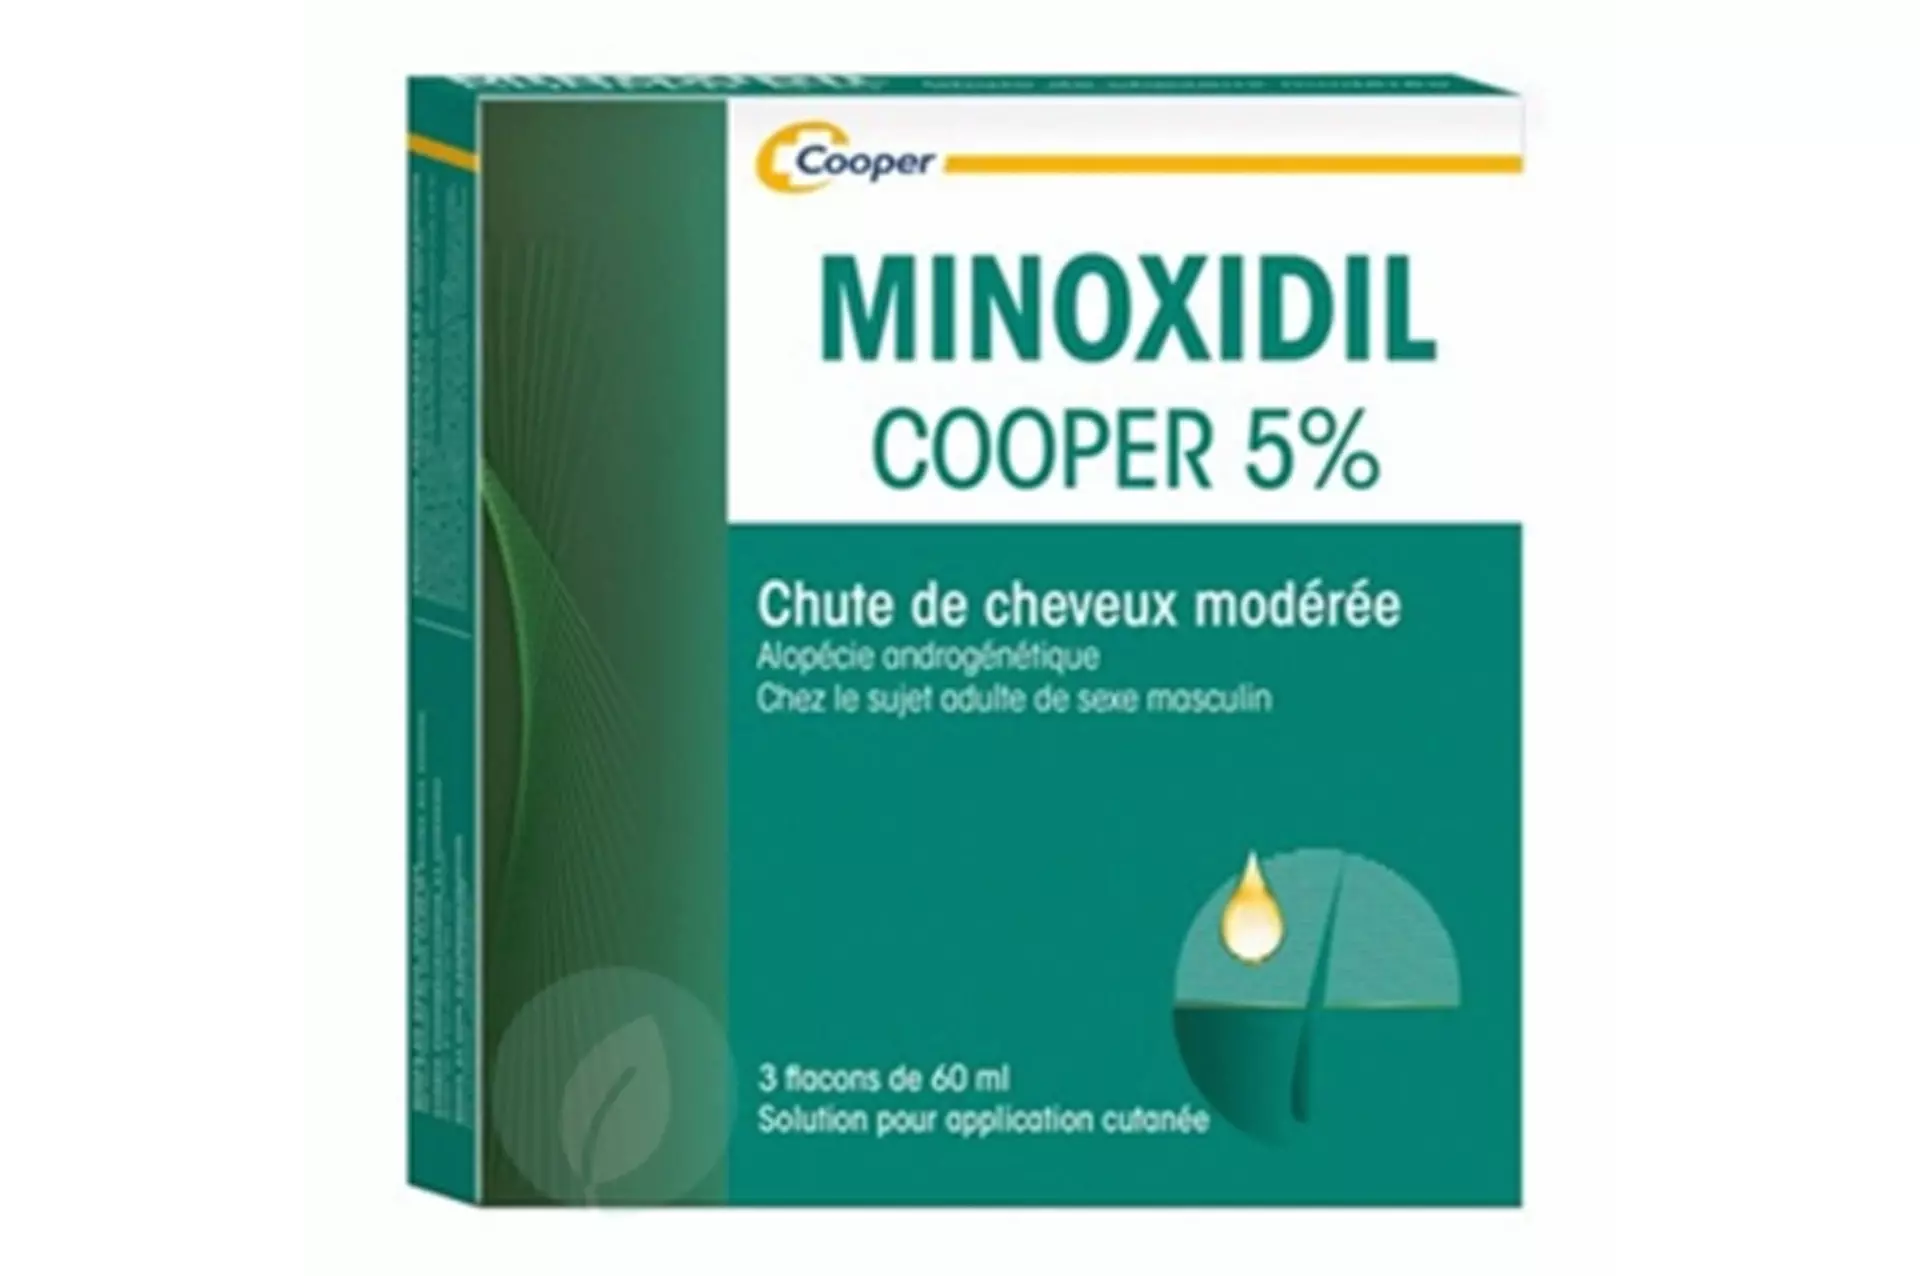 Minoxidil 5% Cooper